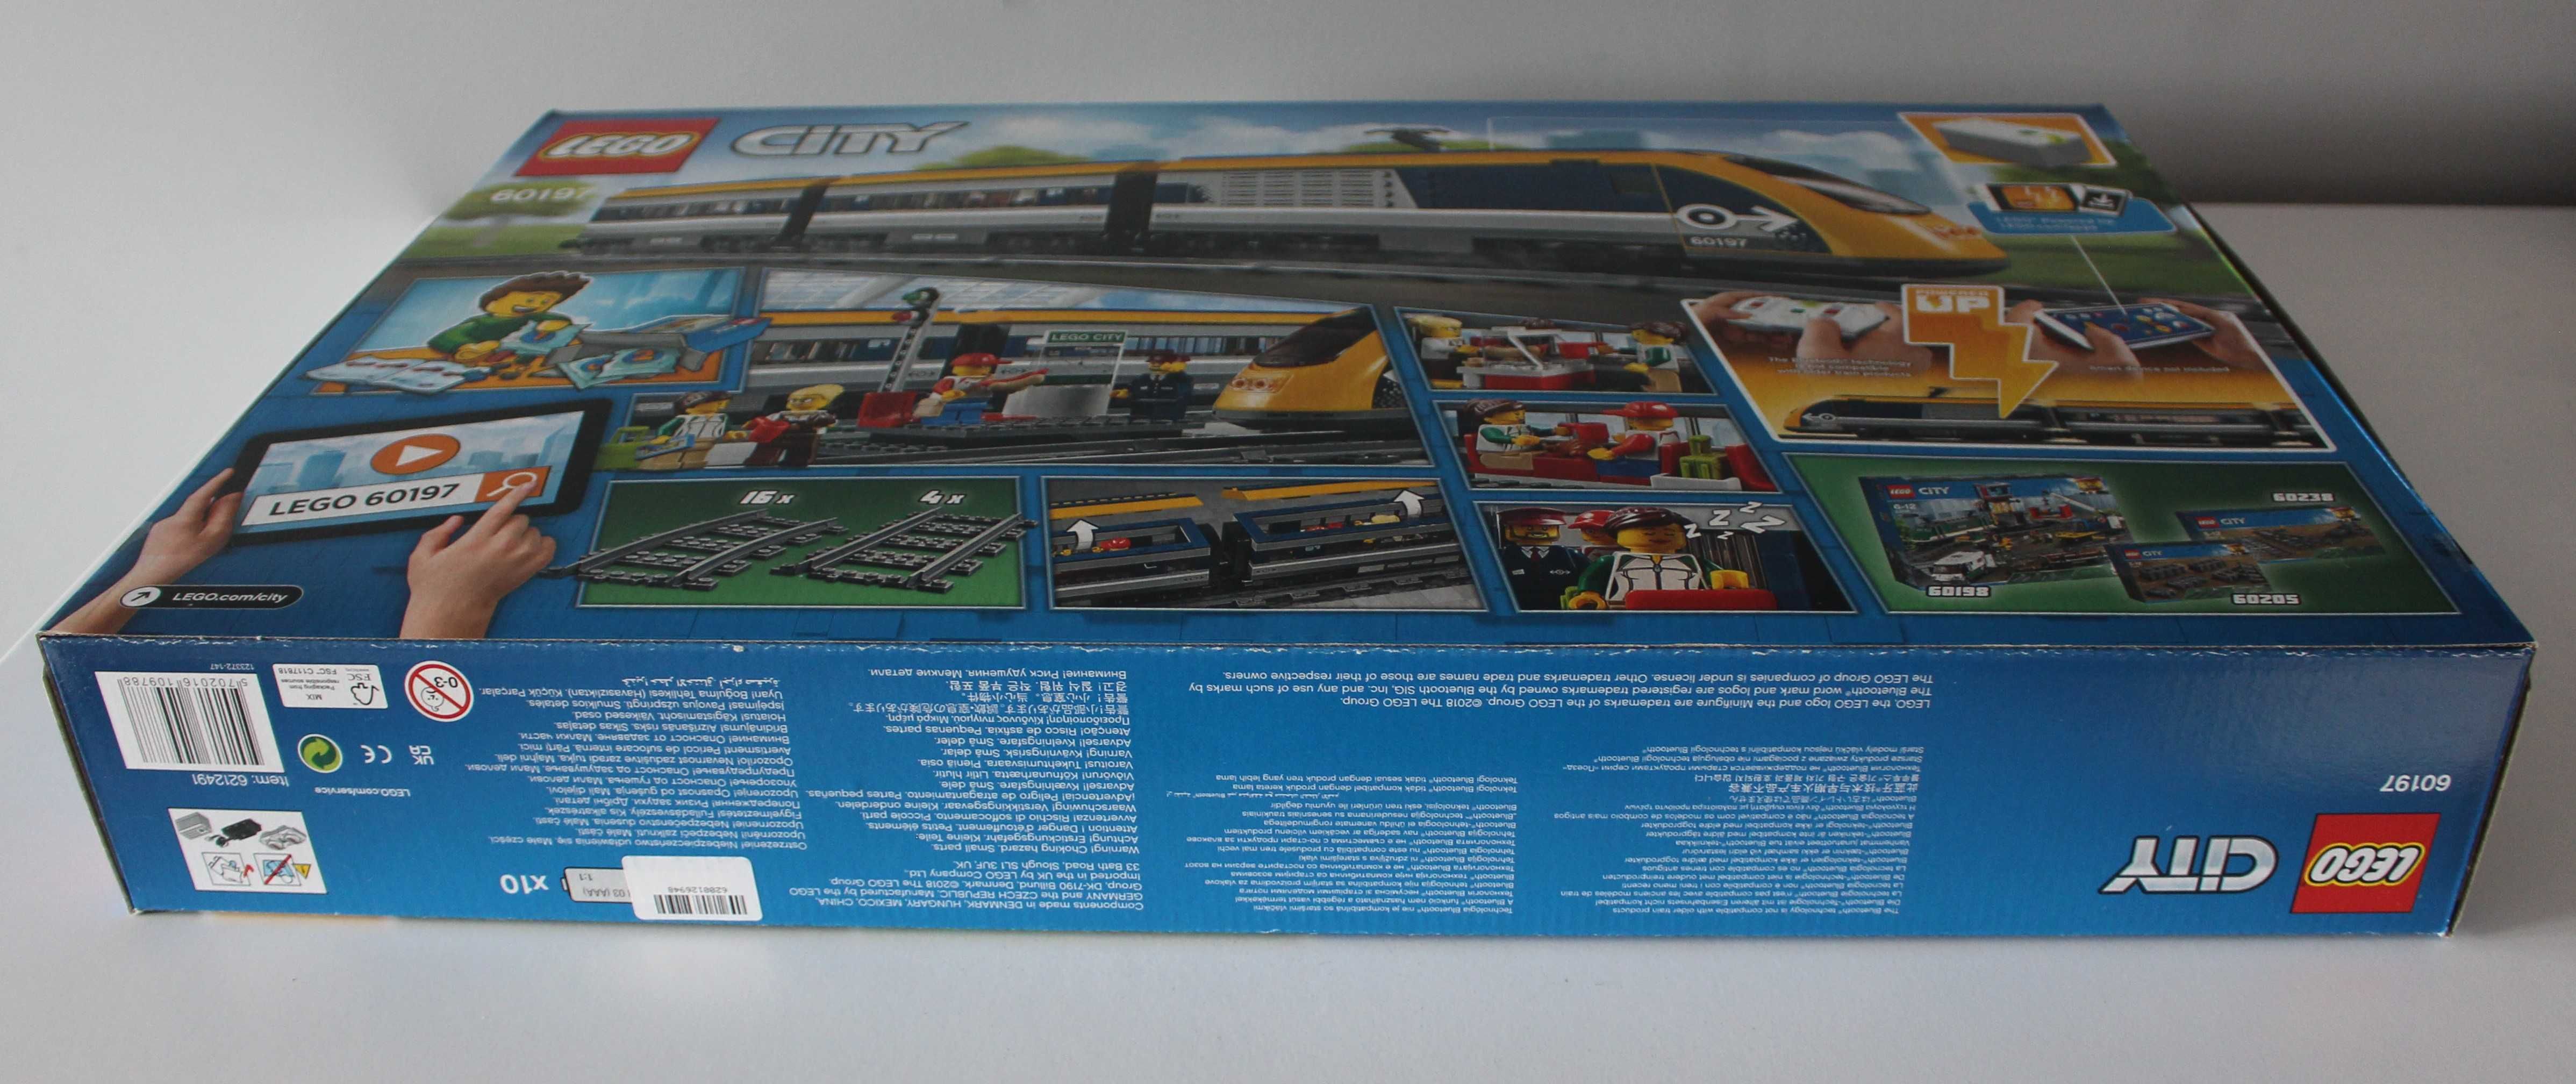 Lego 60197 City pociąg pasażerski